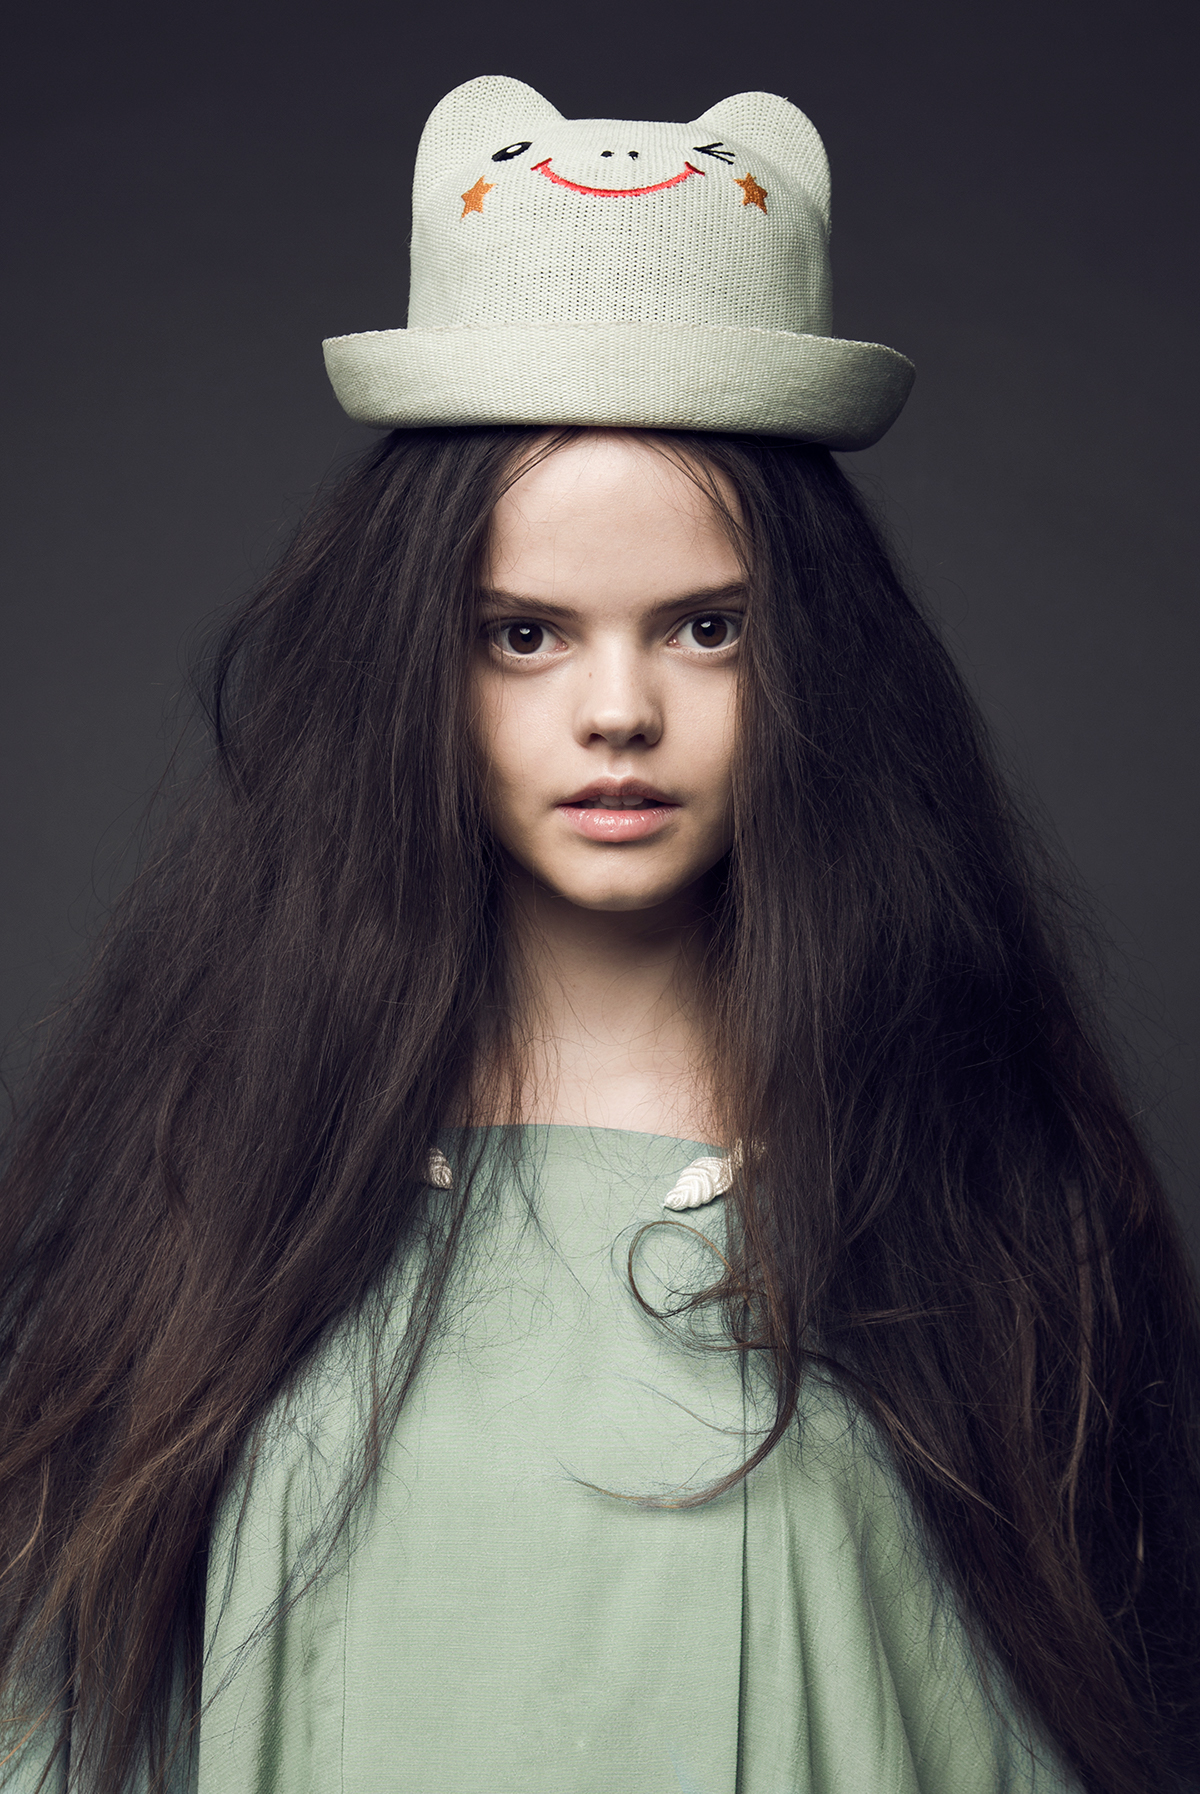 Melissa Juratowitch IMG Model img agency Test Shoot next model winner studio FASHION PHOTOGRAPHER